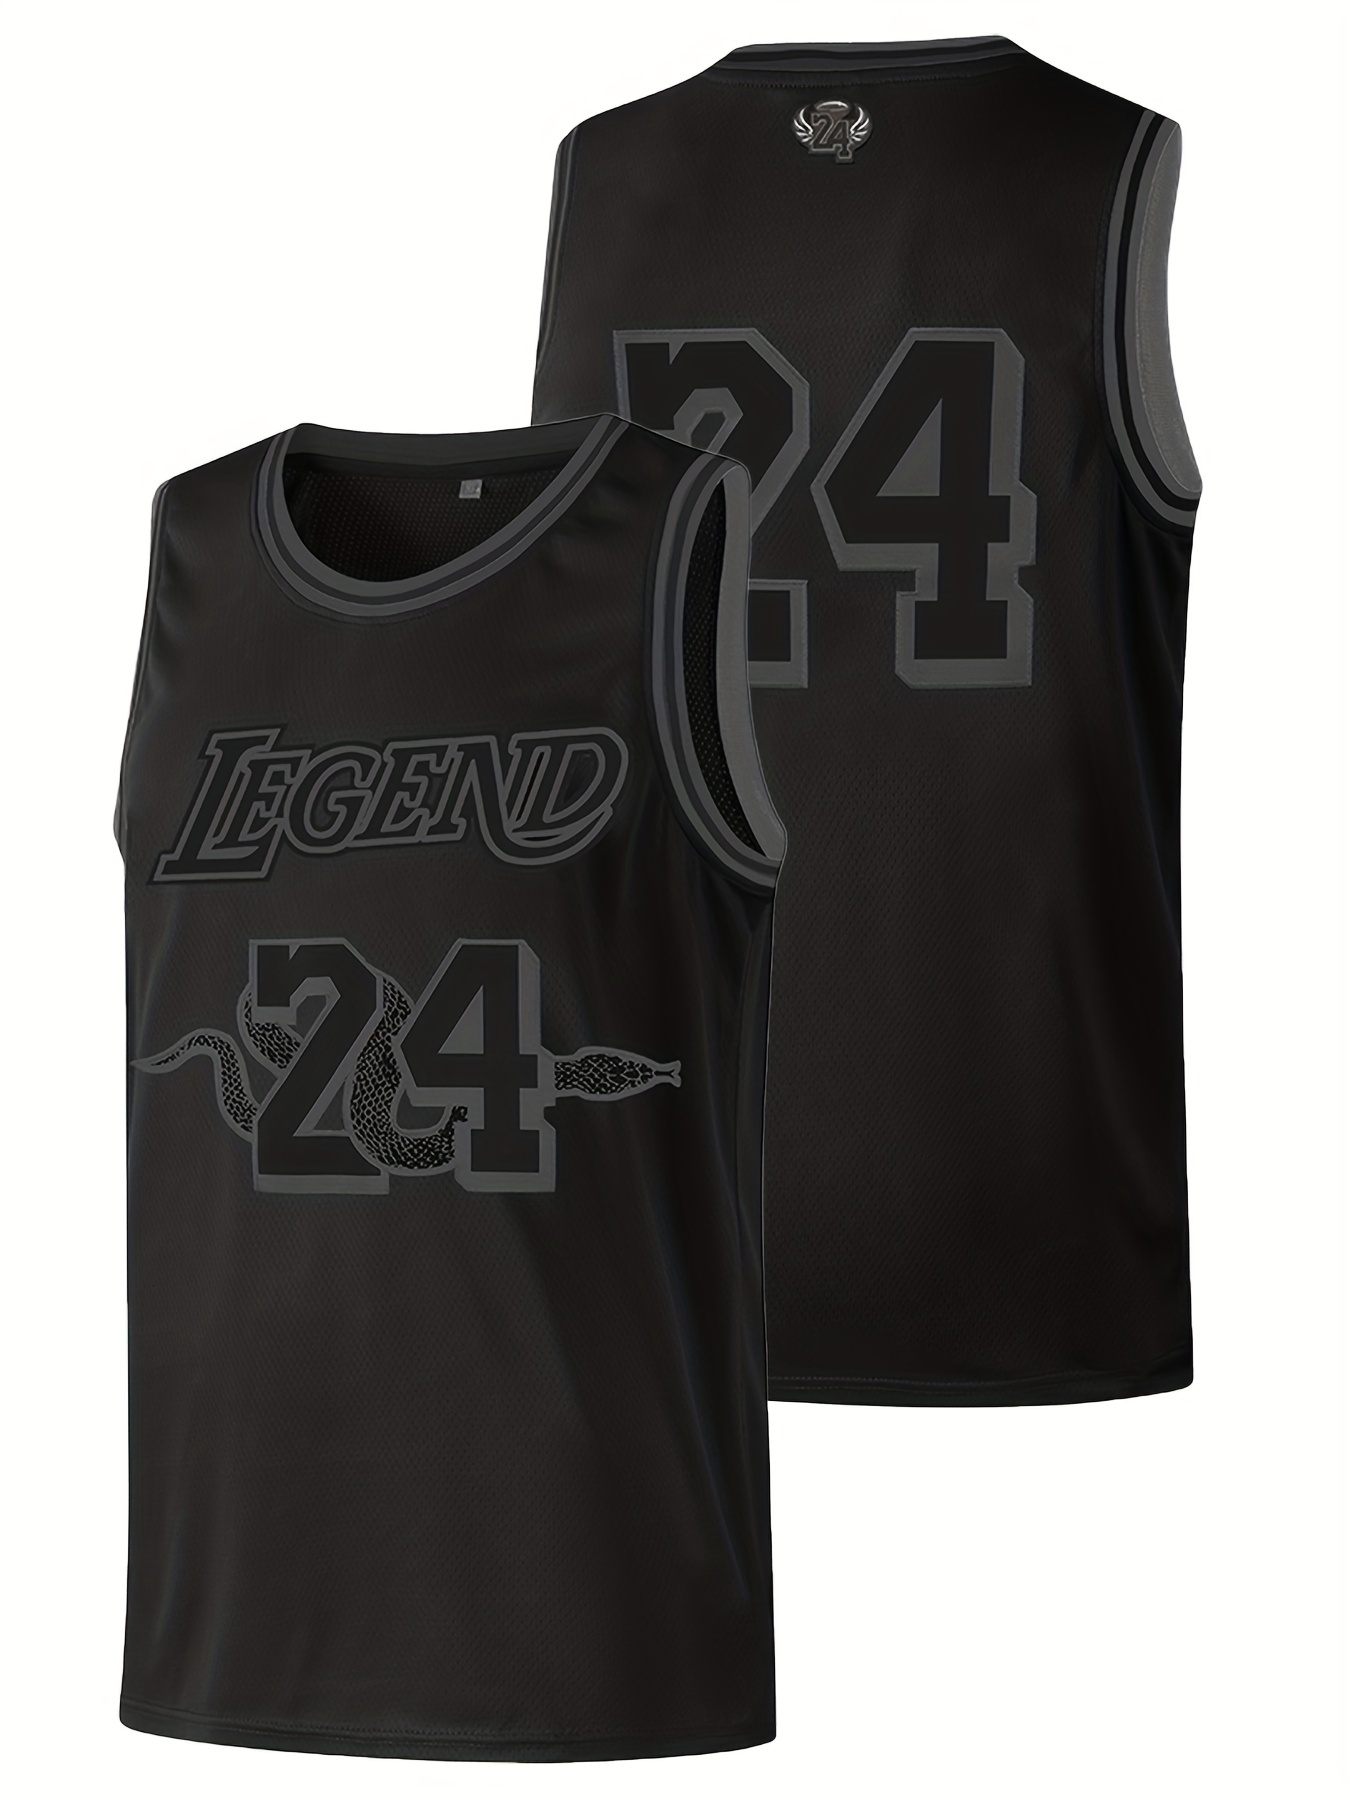 Crenshaw 24 Bryant Basketball Jersey Stitched Men's Summer Top Tank Shirt  White